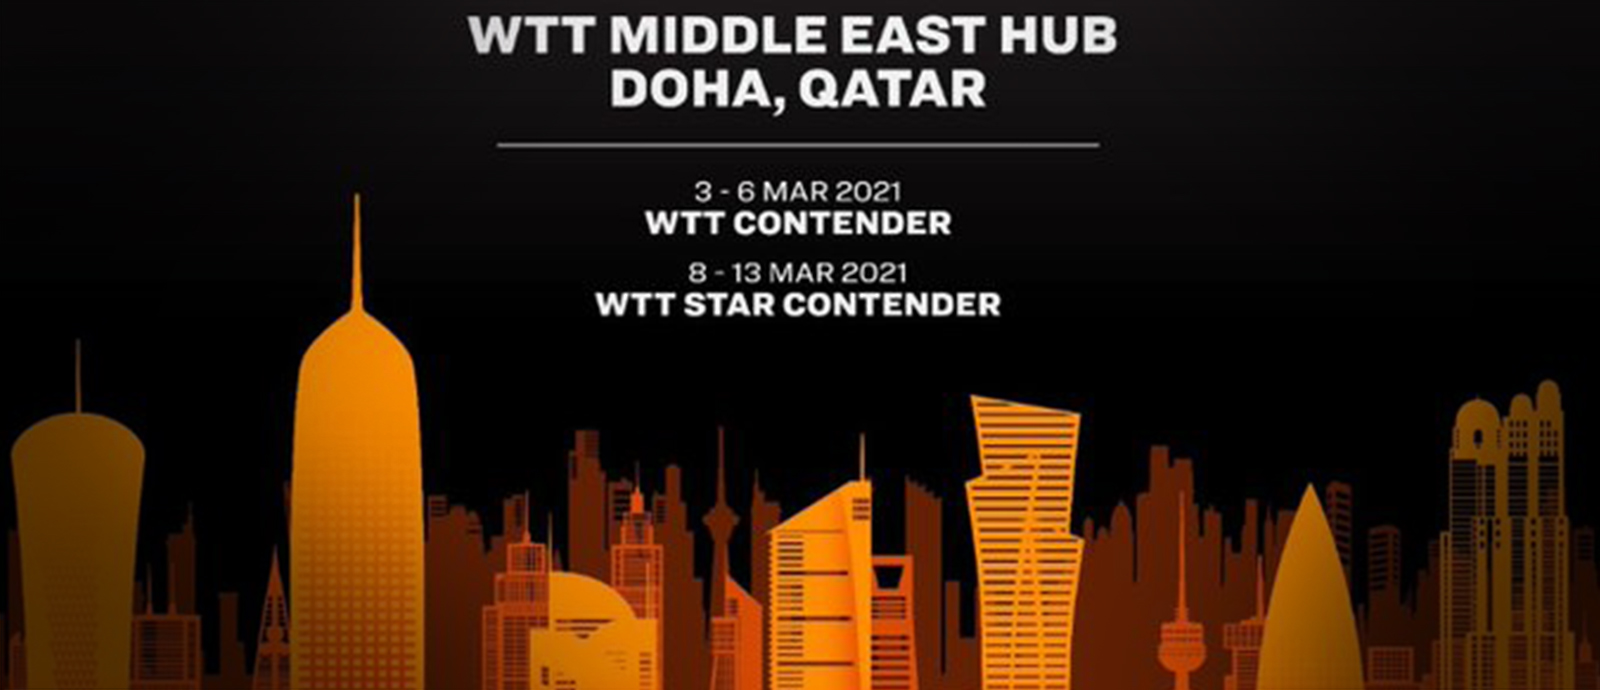 WTT Middle East Hub